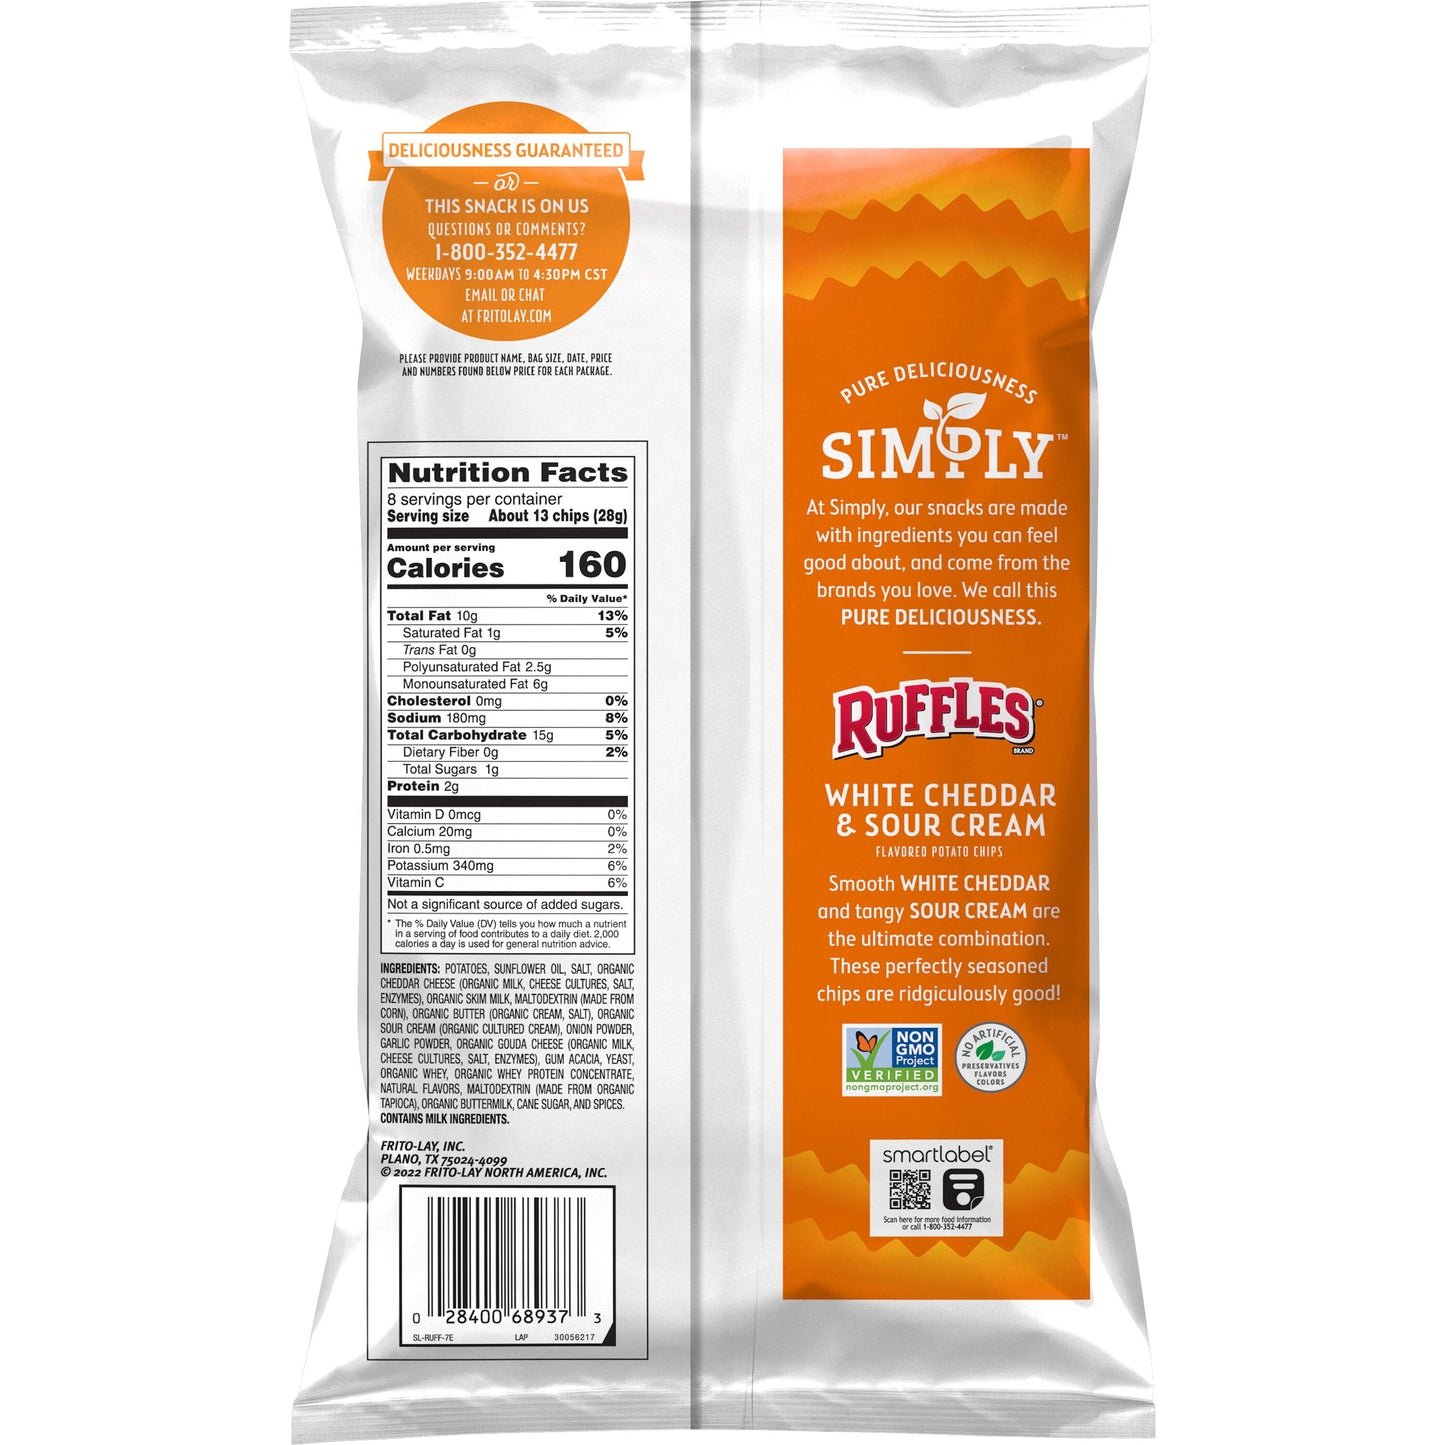 Ruffles, White Cheddar & Sour Cream Potato Chips, 8 Oz Bag, Gluten-Free, Snack Chips